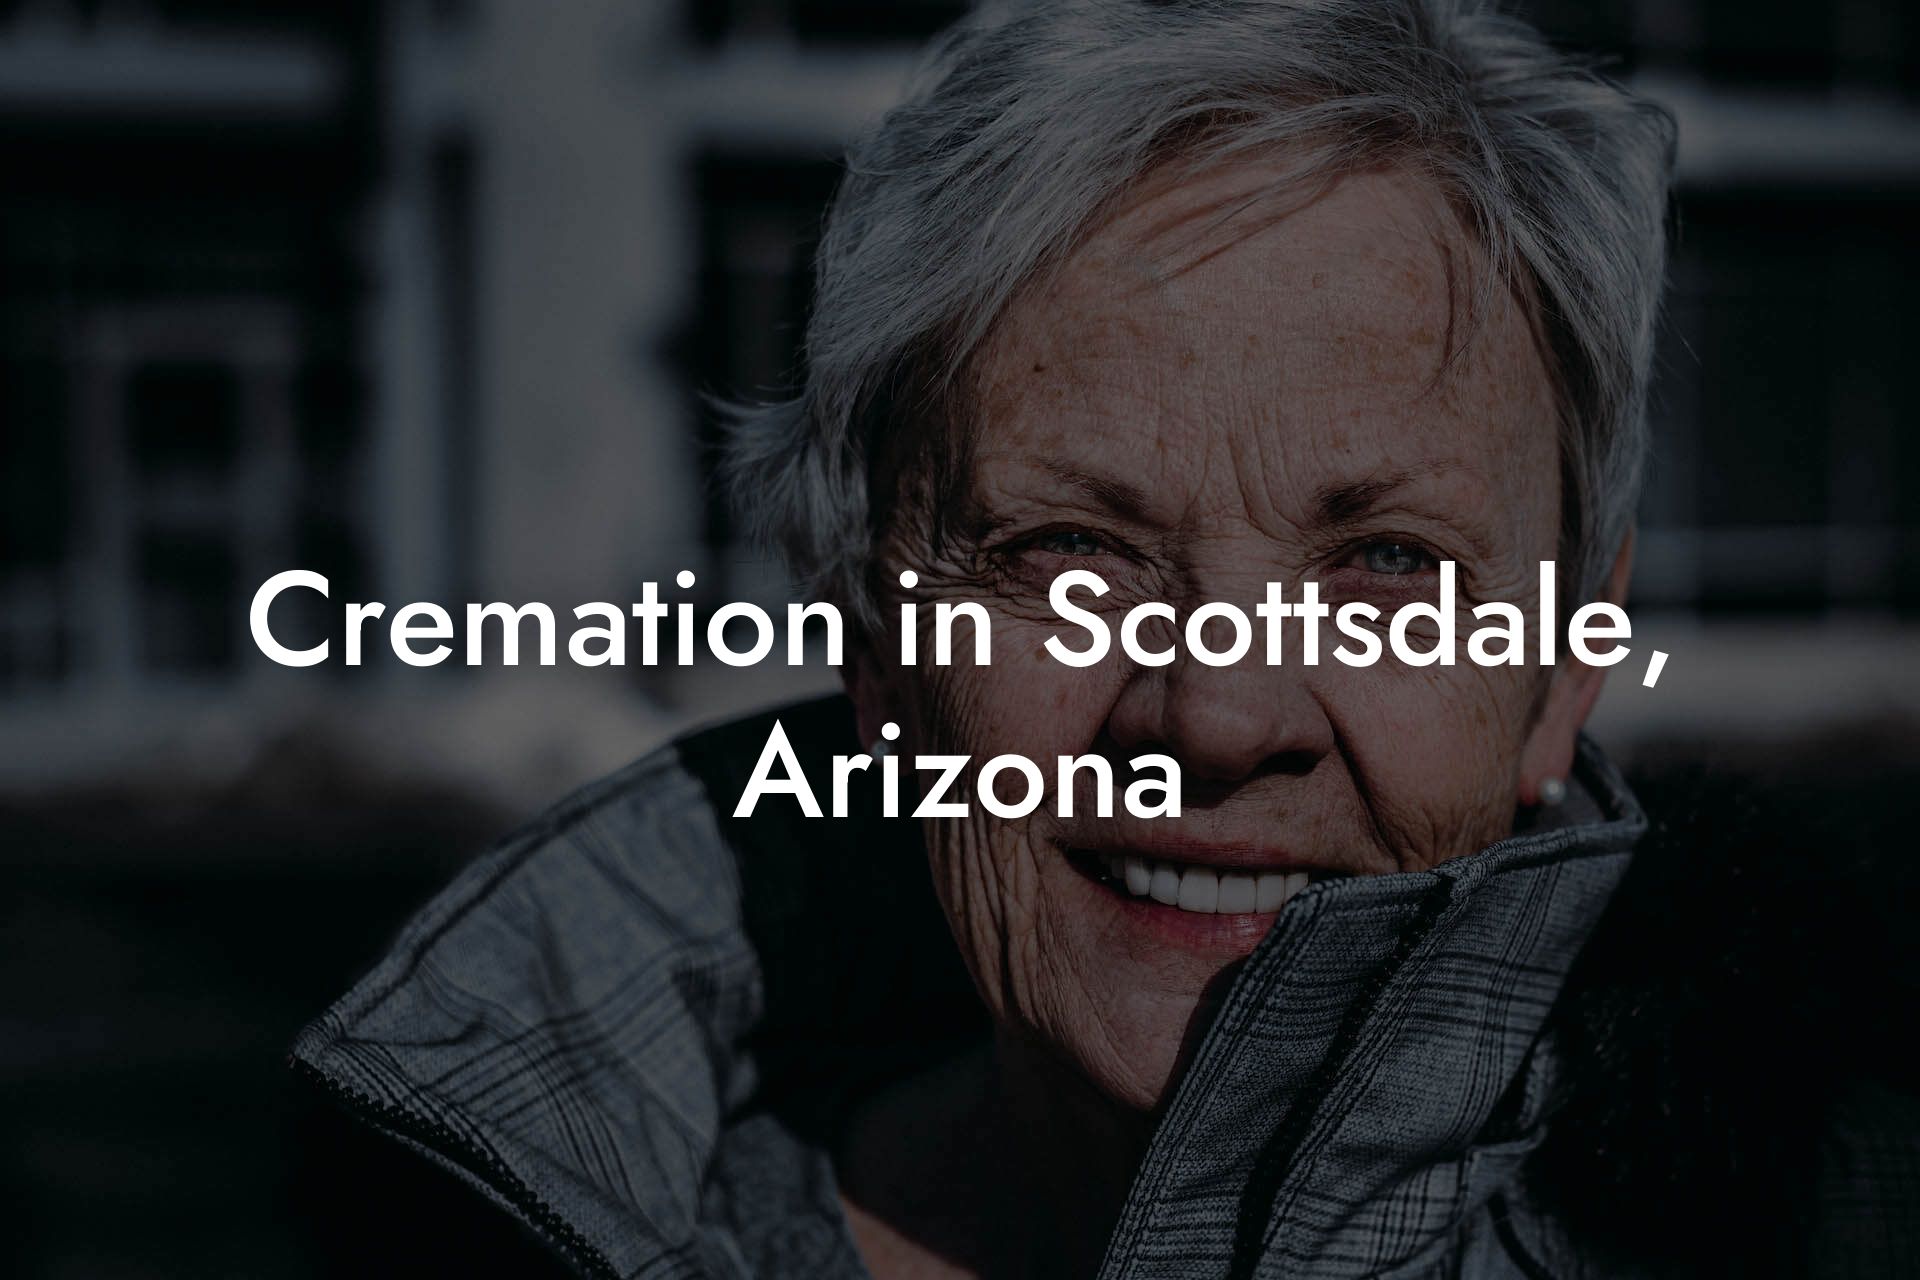 Cremation in Scottsdale, Arizona